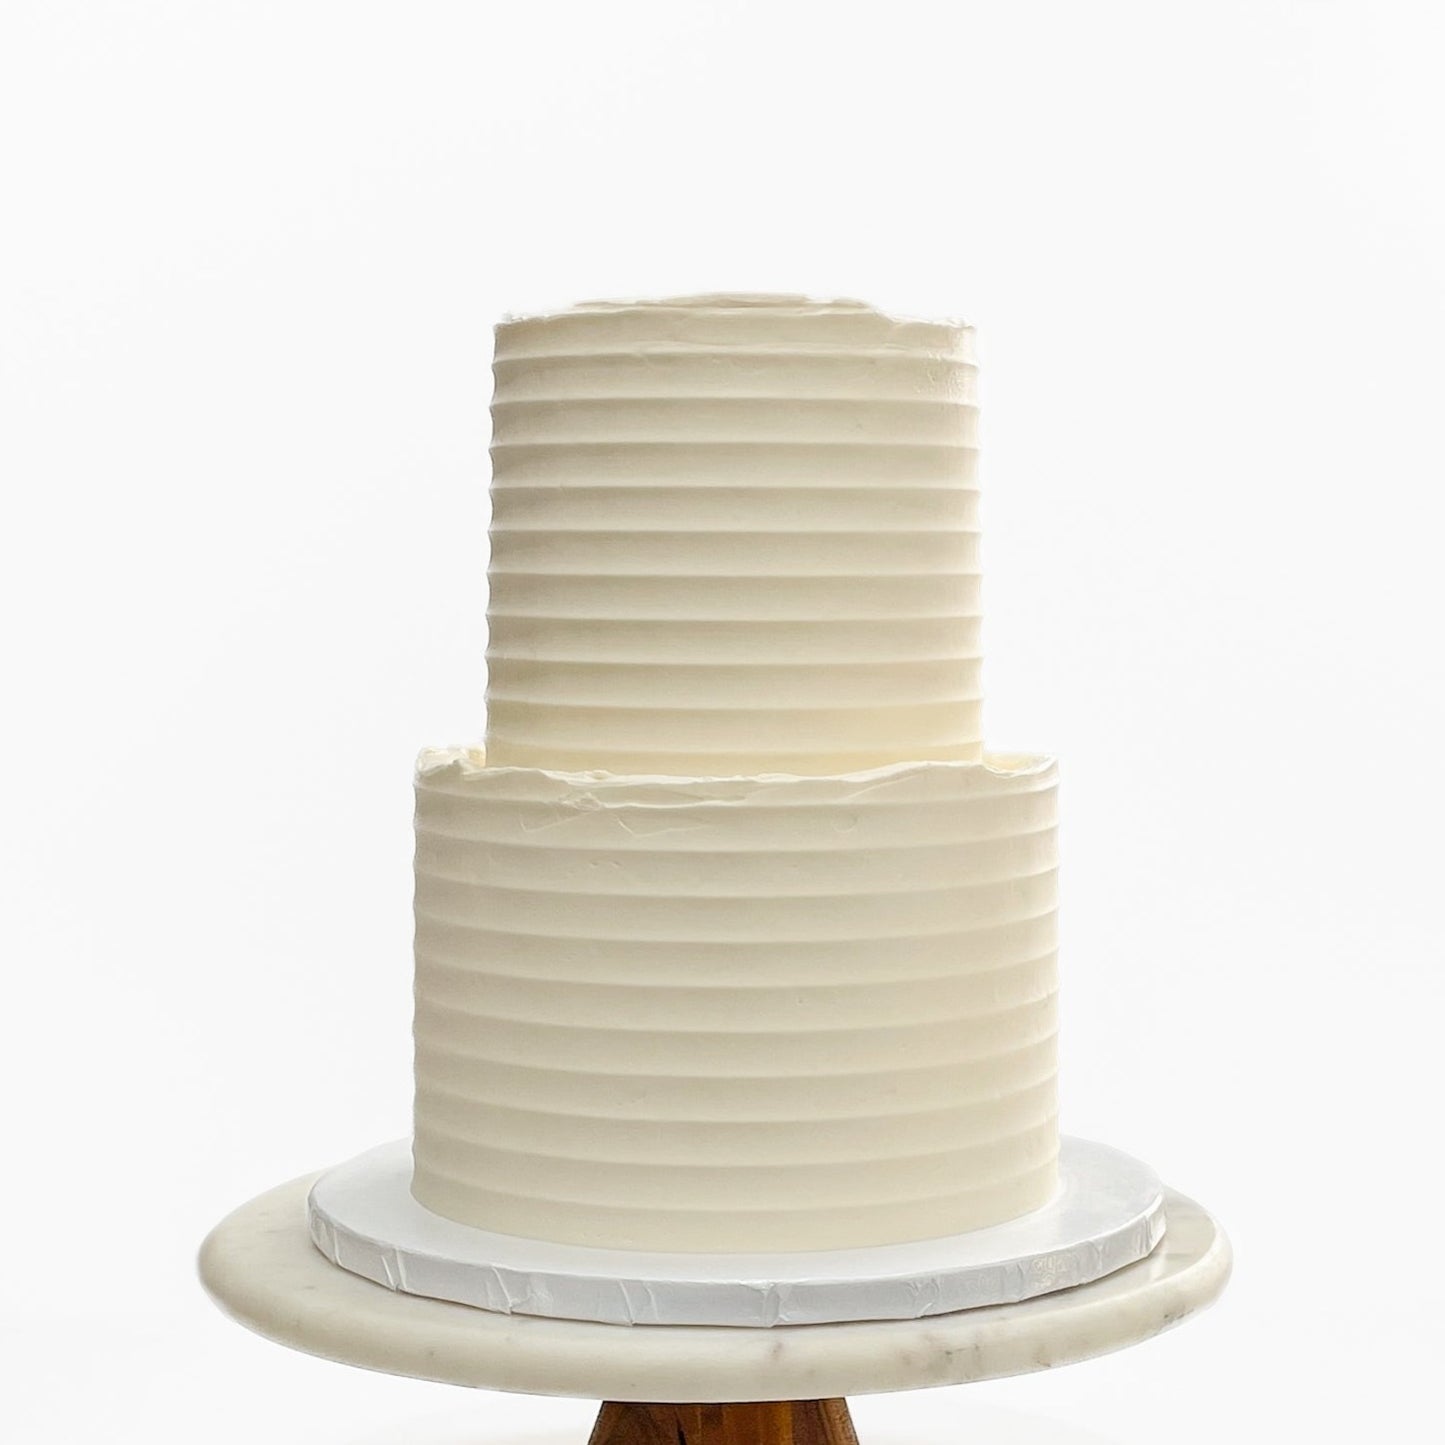 Classic 2 tier cake